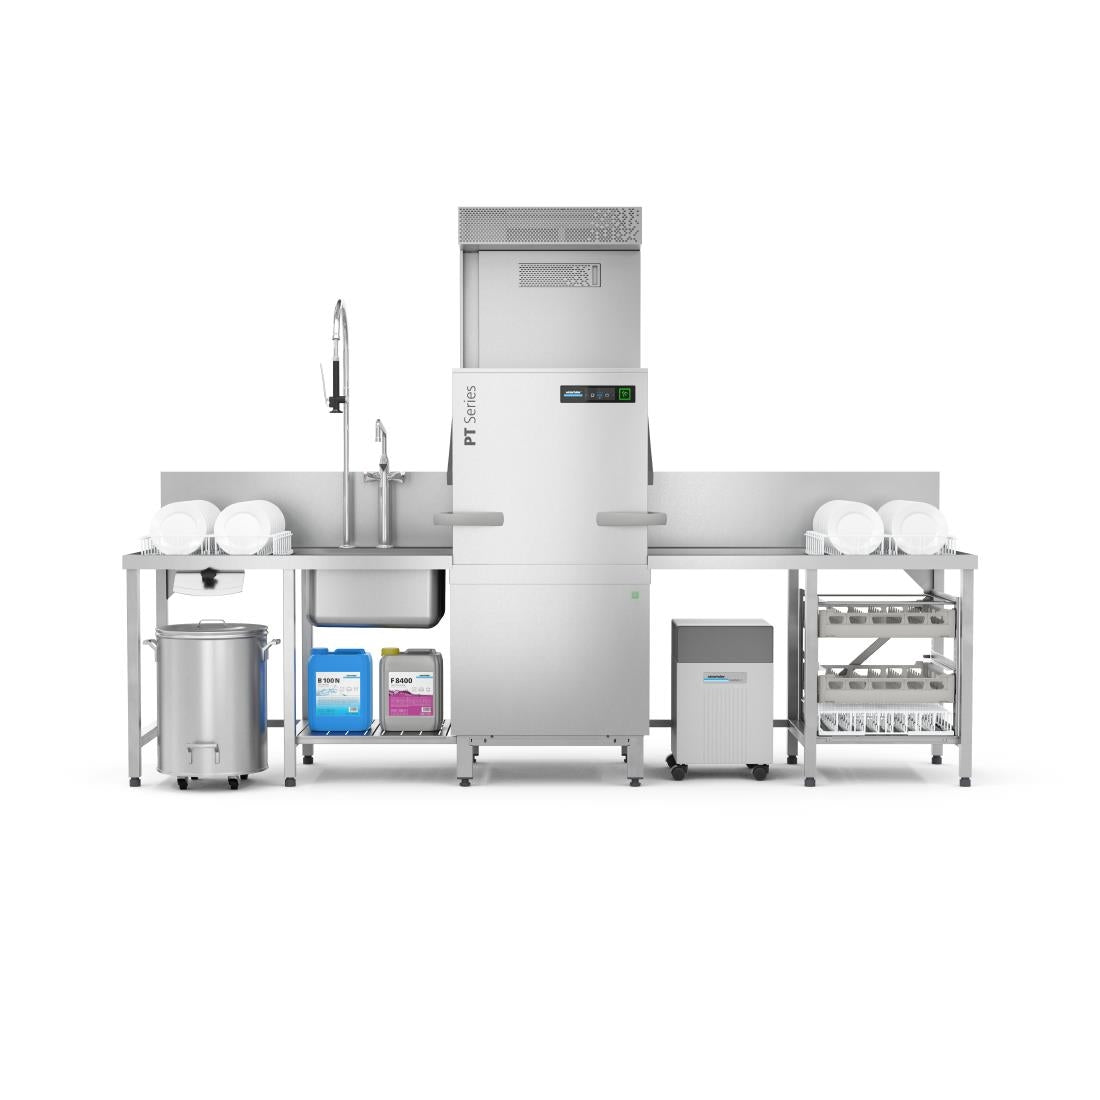 FT528 Winterhalter Pass Through Dishwasher PT-L JD Catering Equipment Solutions Ltd